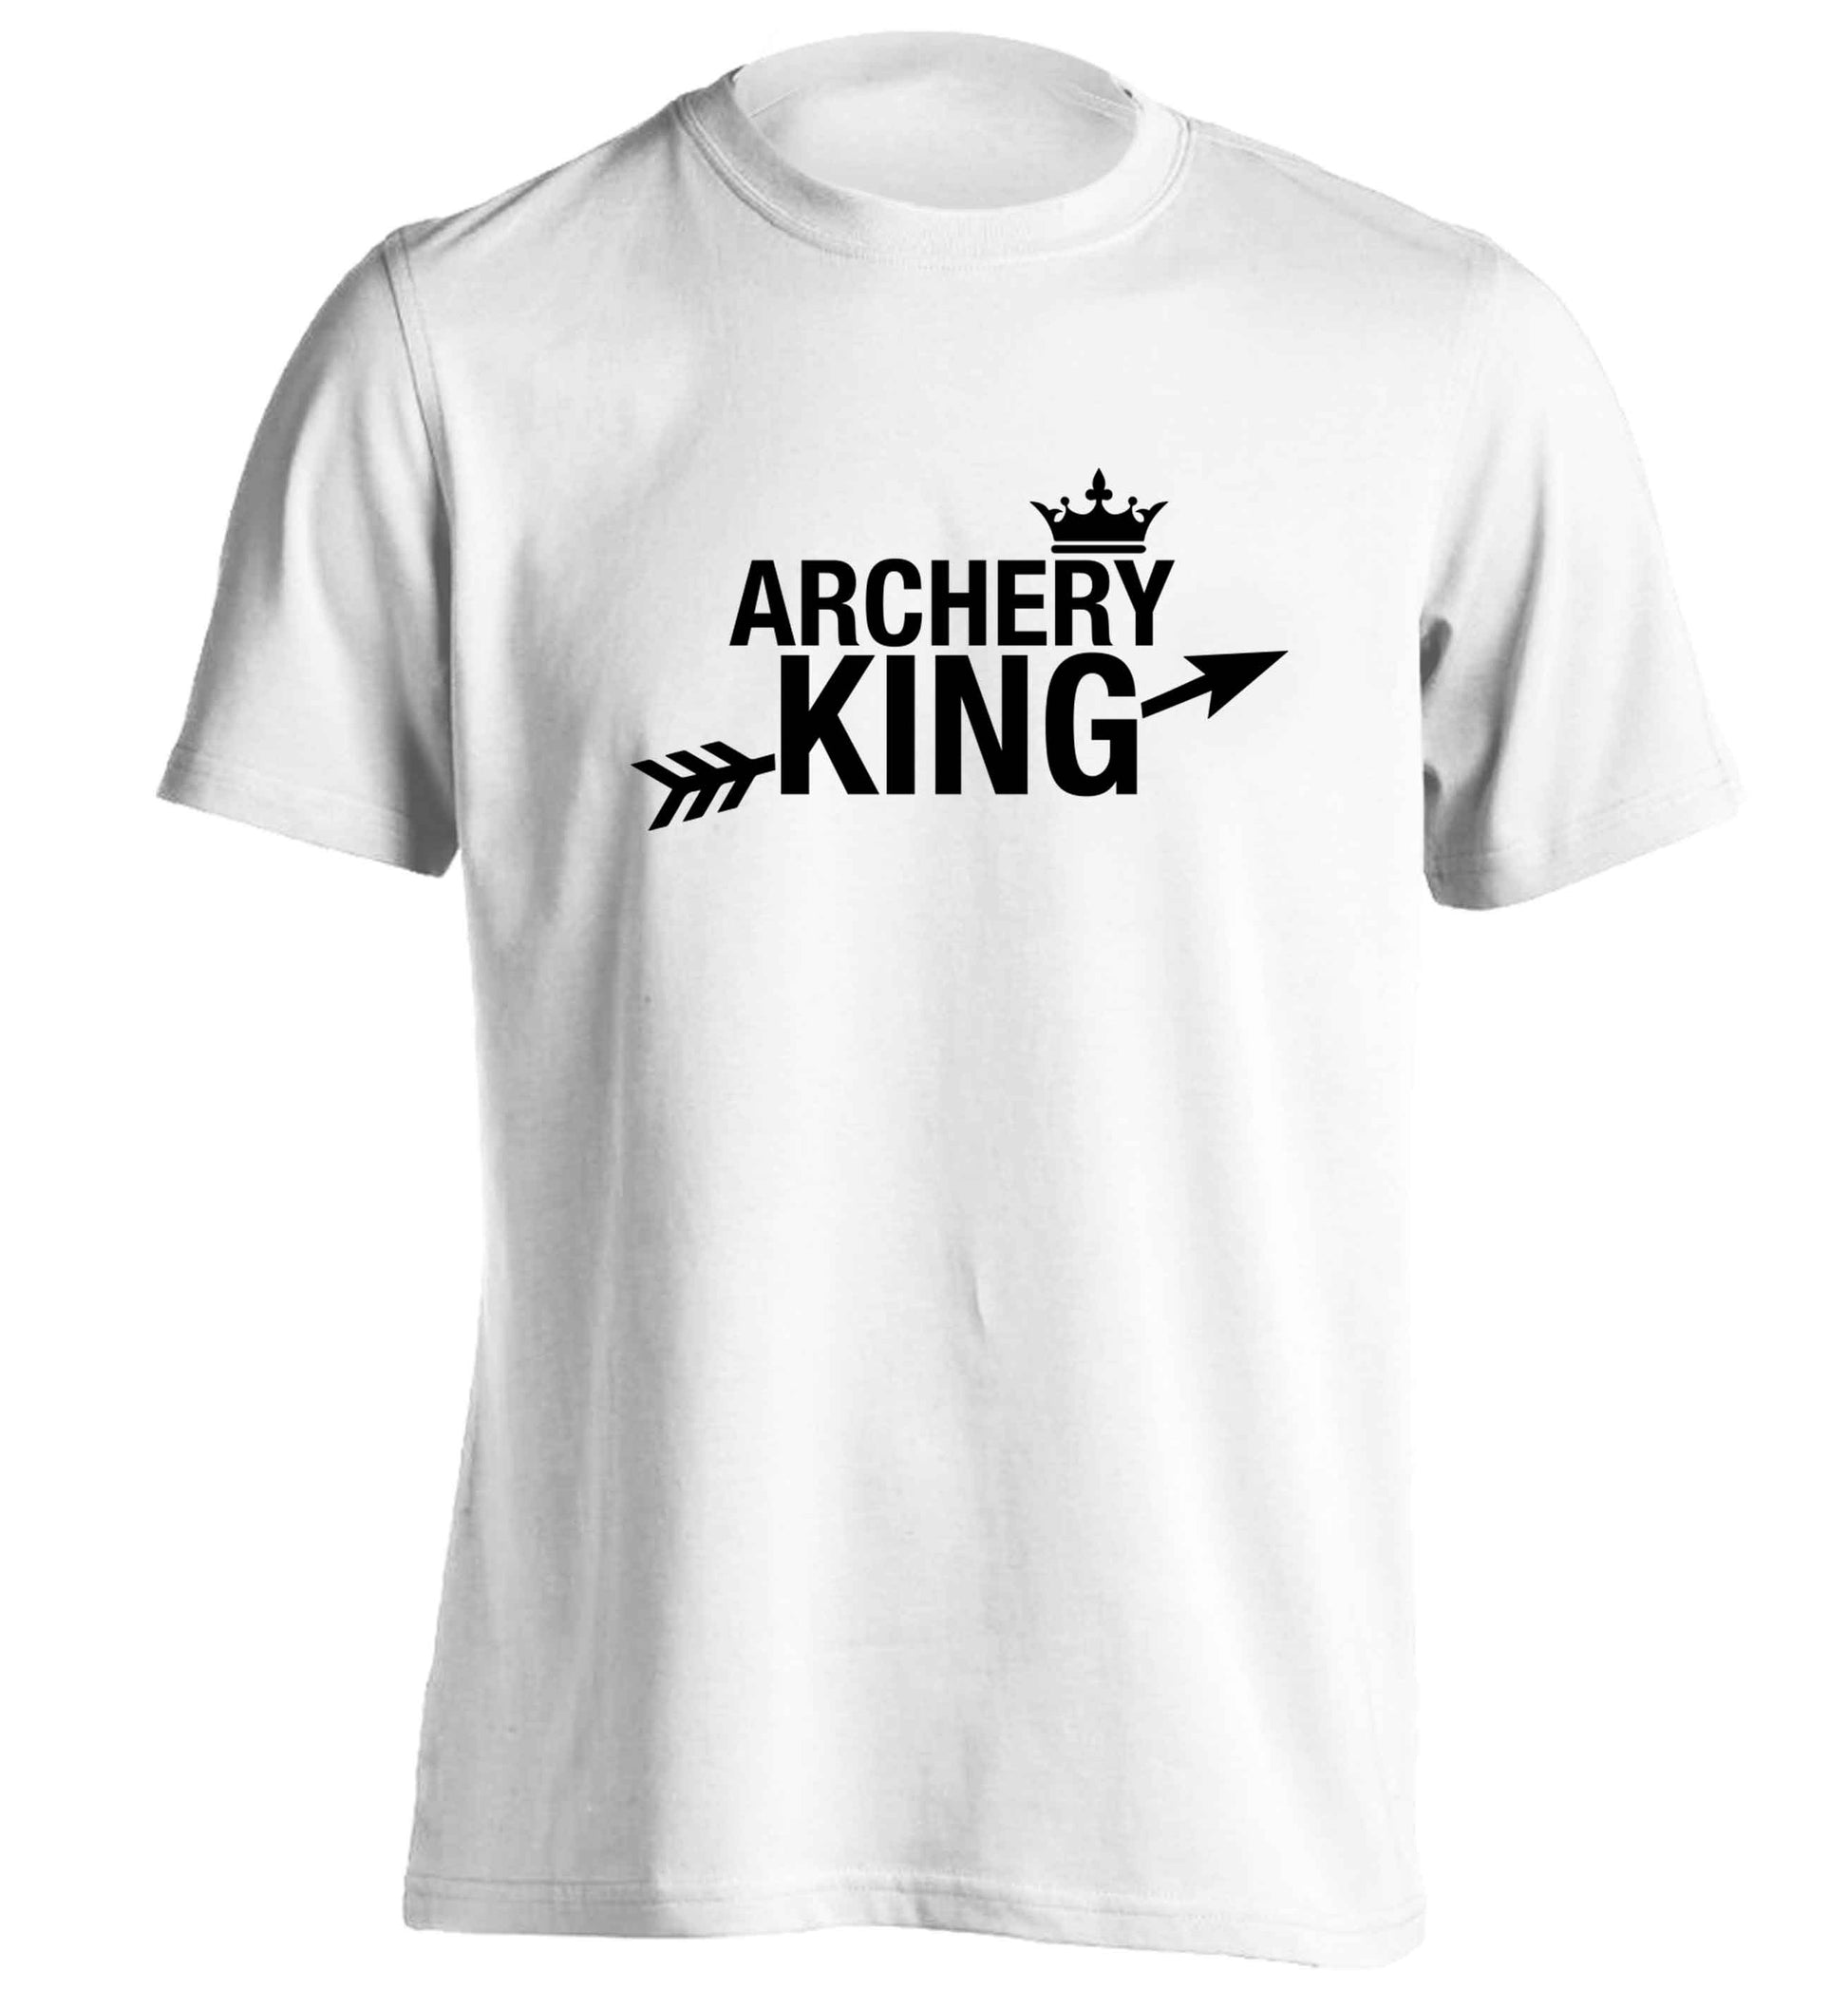 Archery king adults unisex white Tshirt 2XL